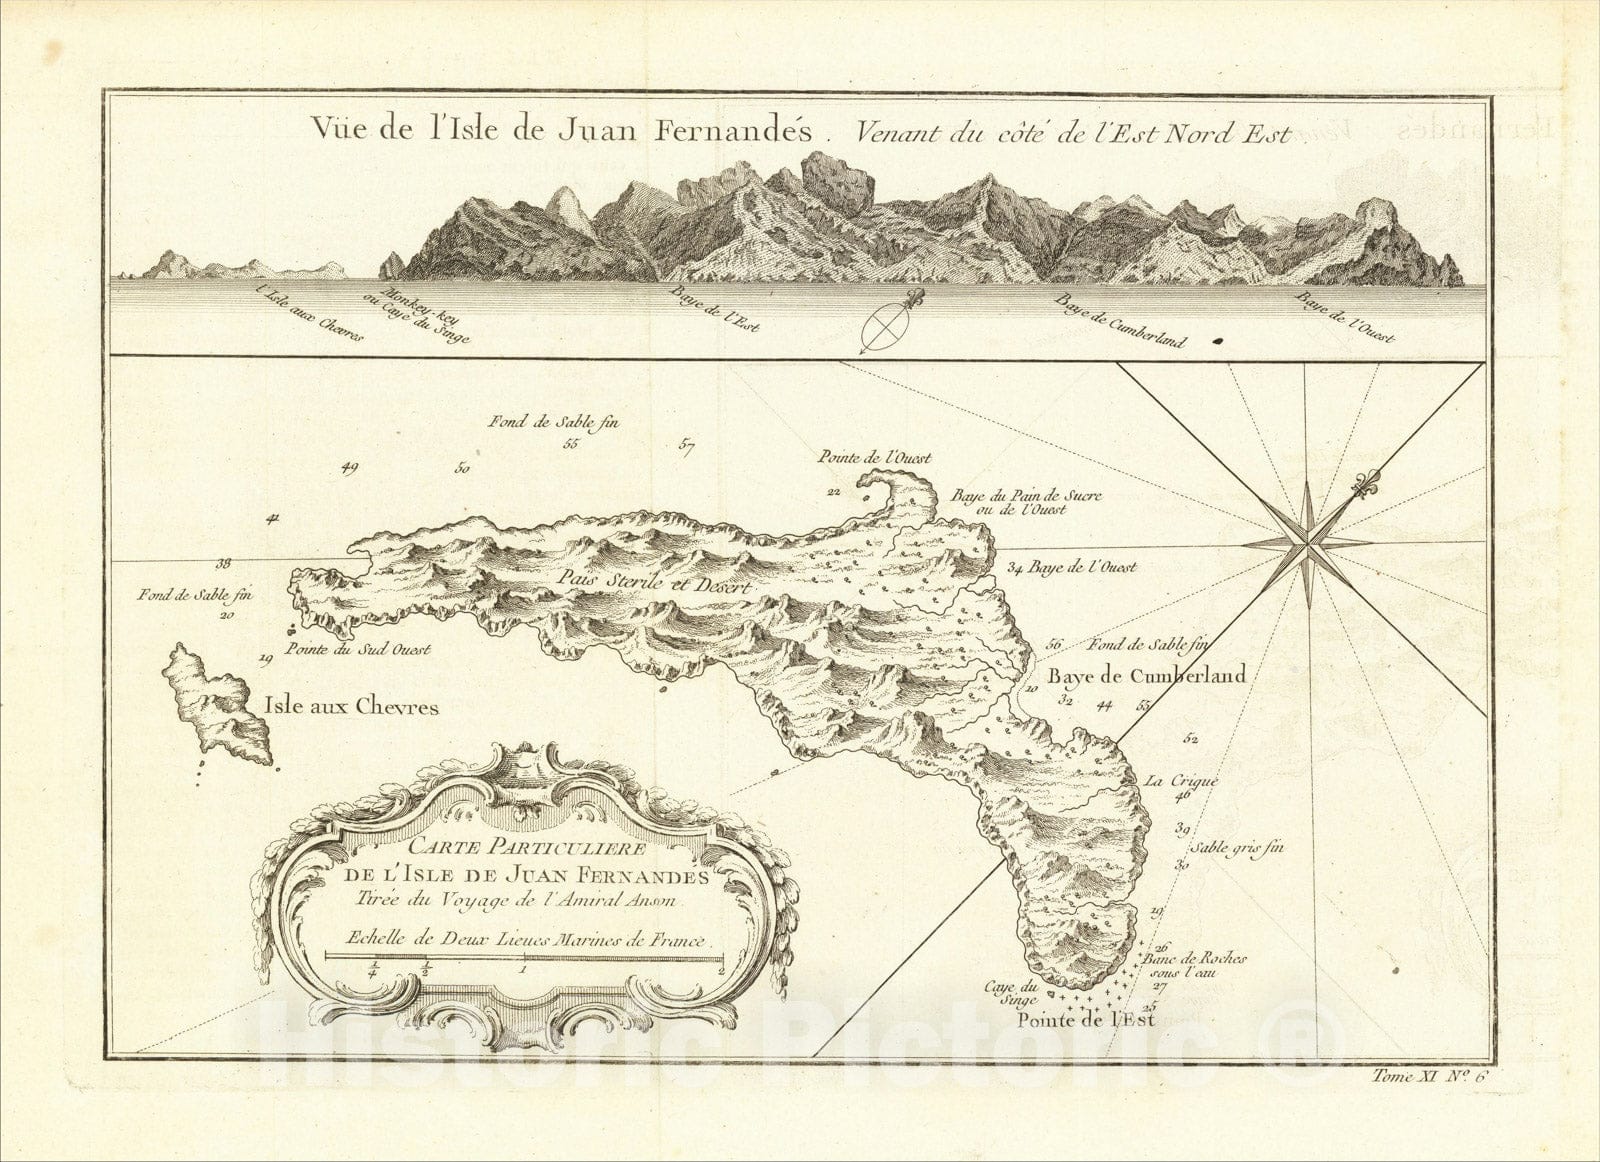 Historic Map : Carte Particuliere De L'Isle De Juan Fernandes, [with view of island] (Robinson Crusoe's Island), 1759, Jacques Nicolas Bellin, Vintage Wall Art